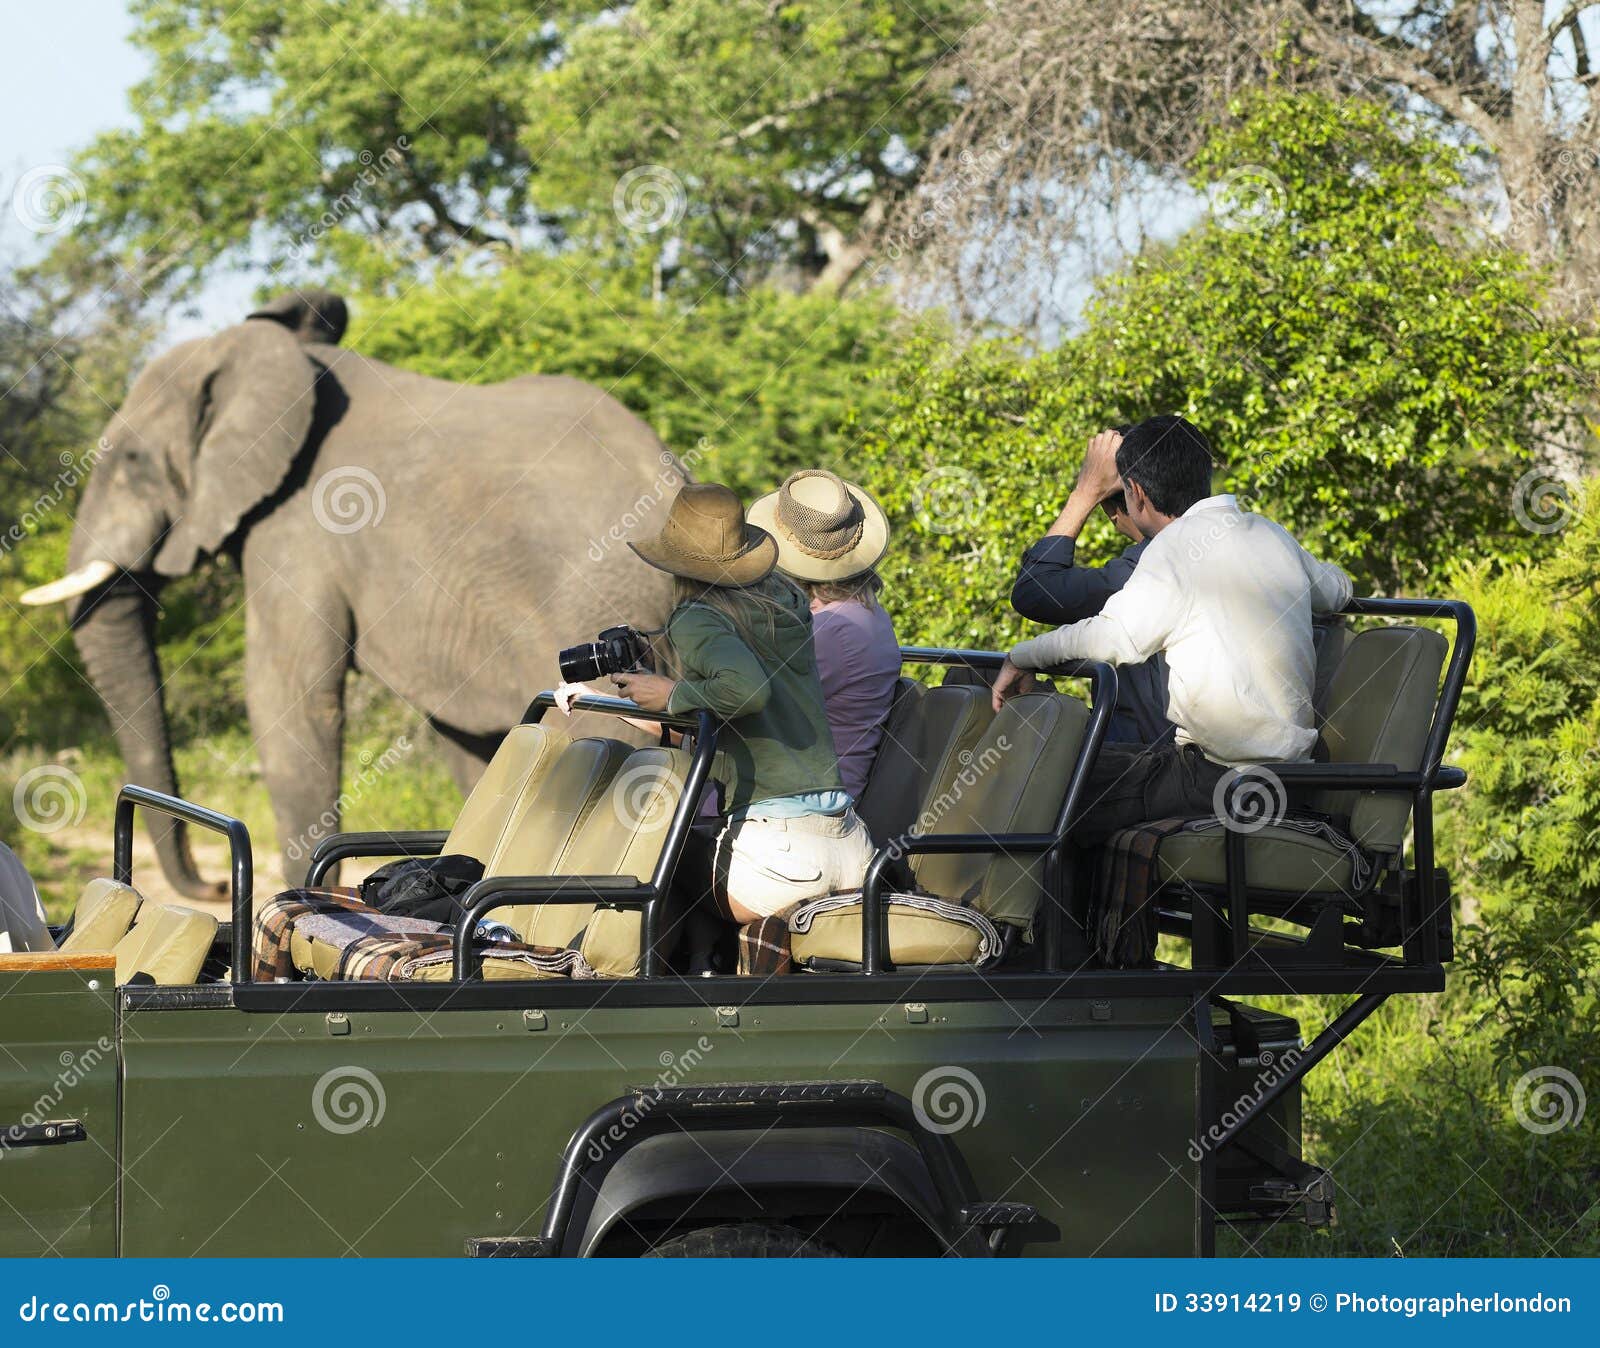 tourists on safari watching elephant